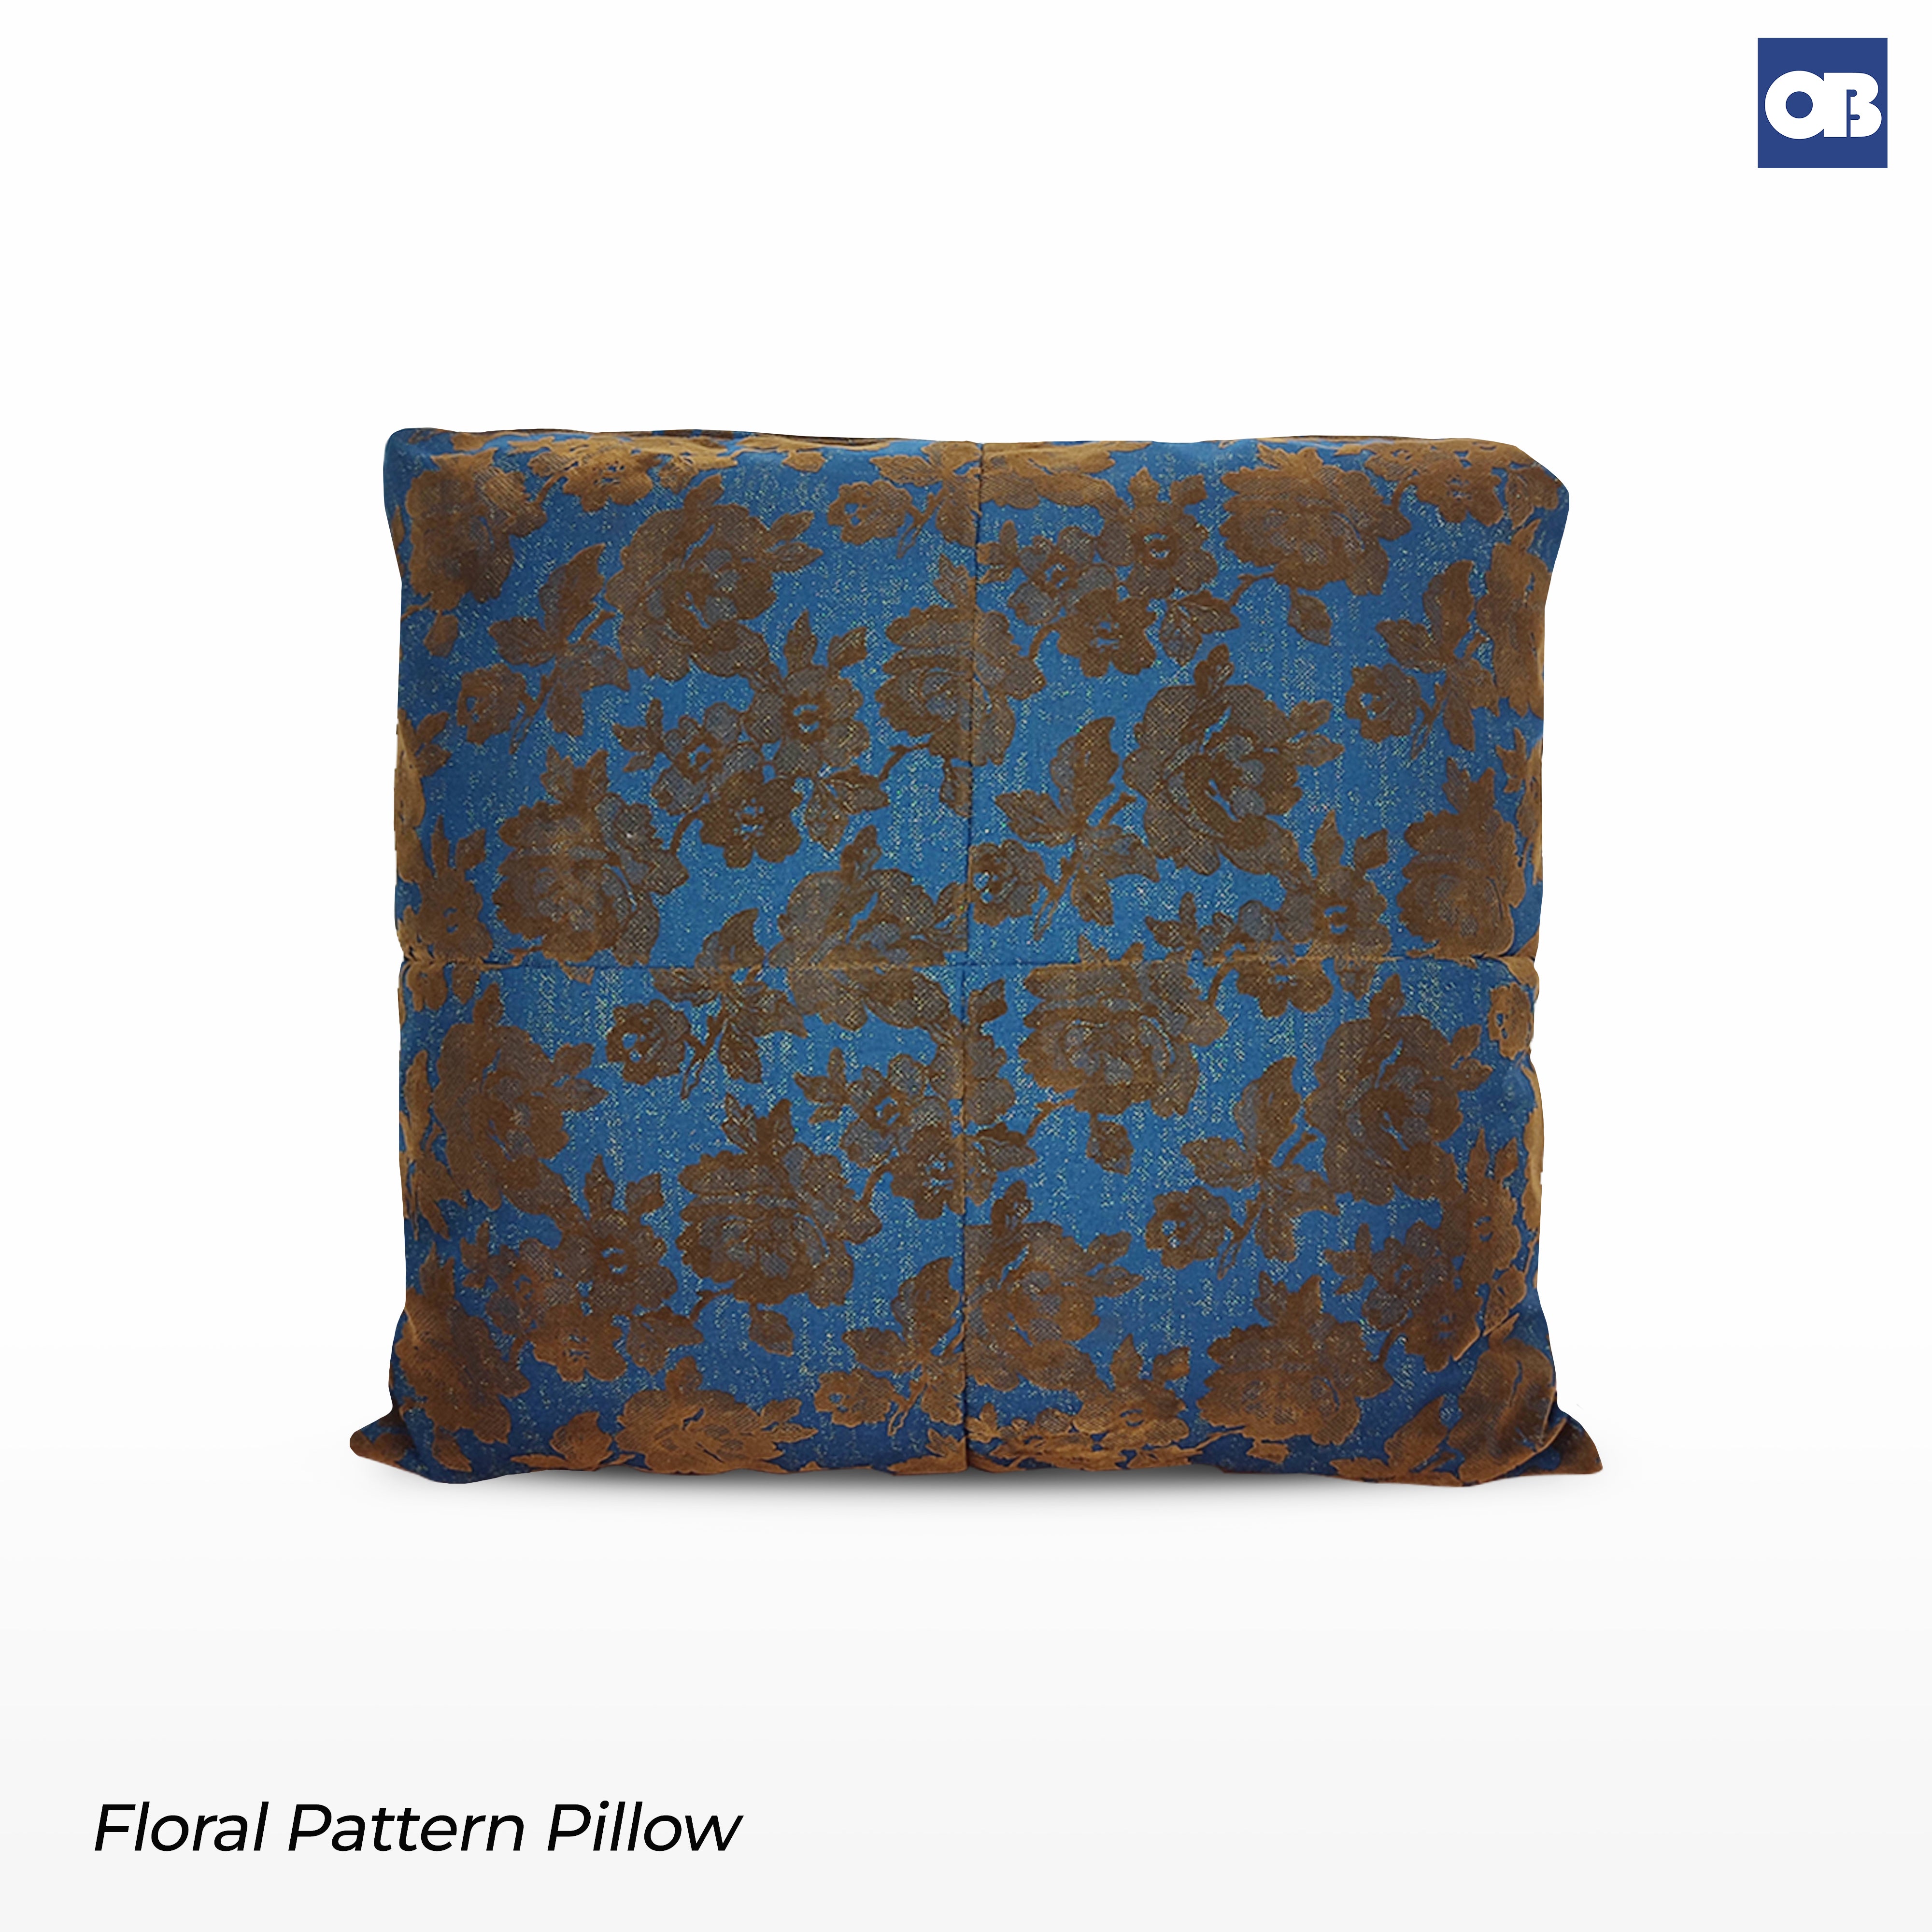 OB Floral Pattern Pillow